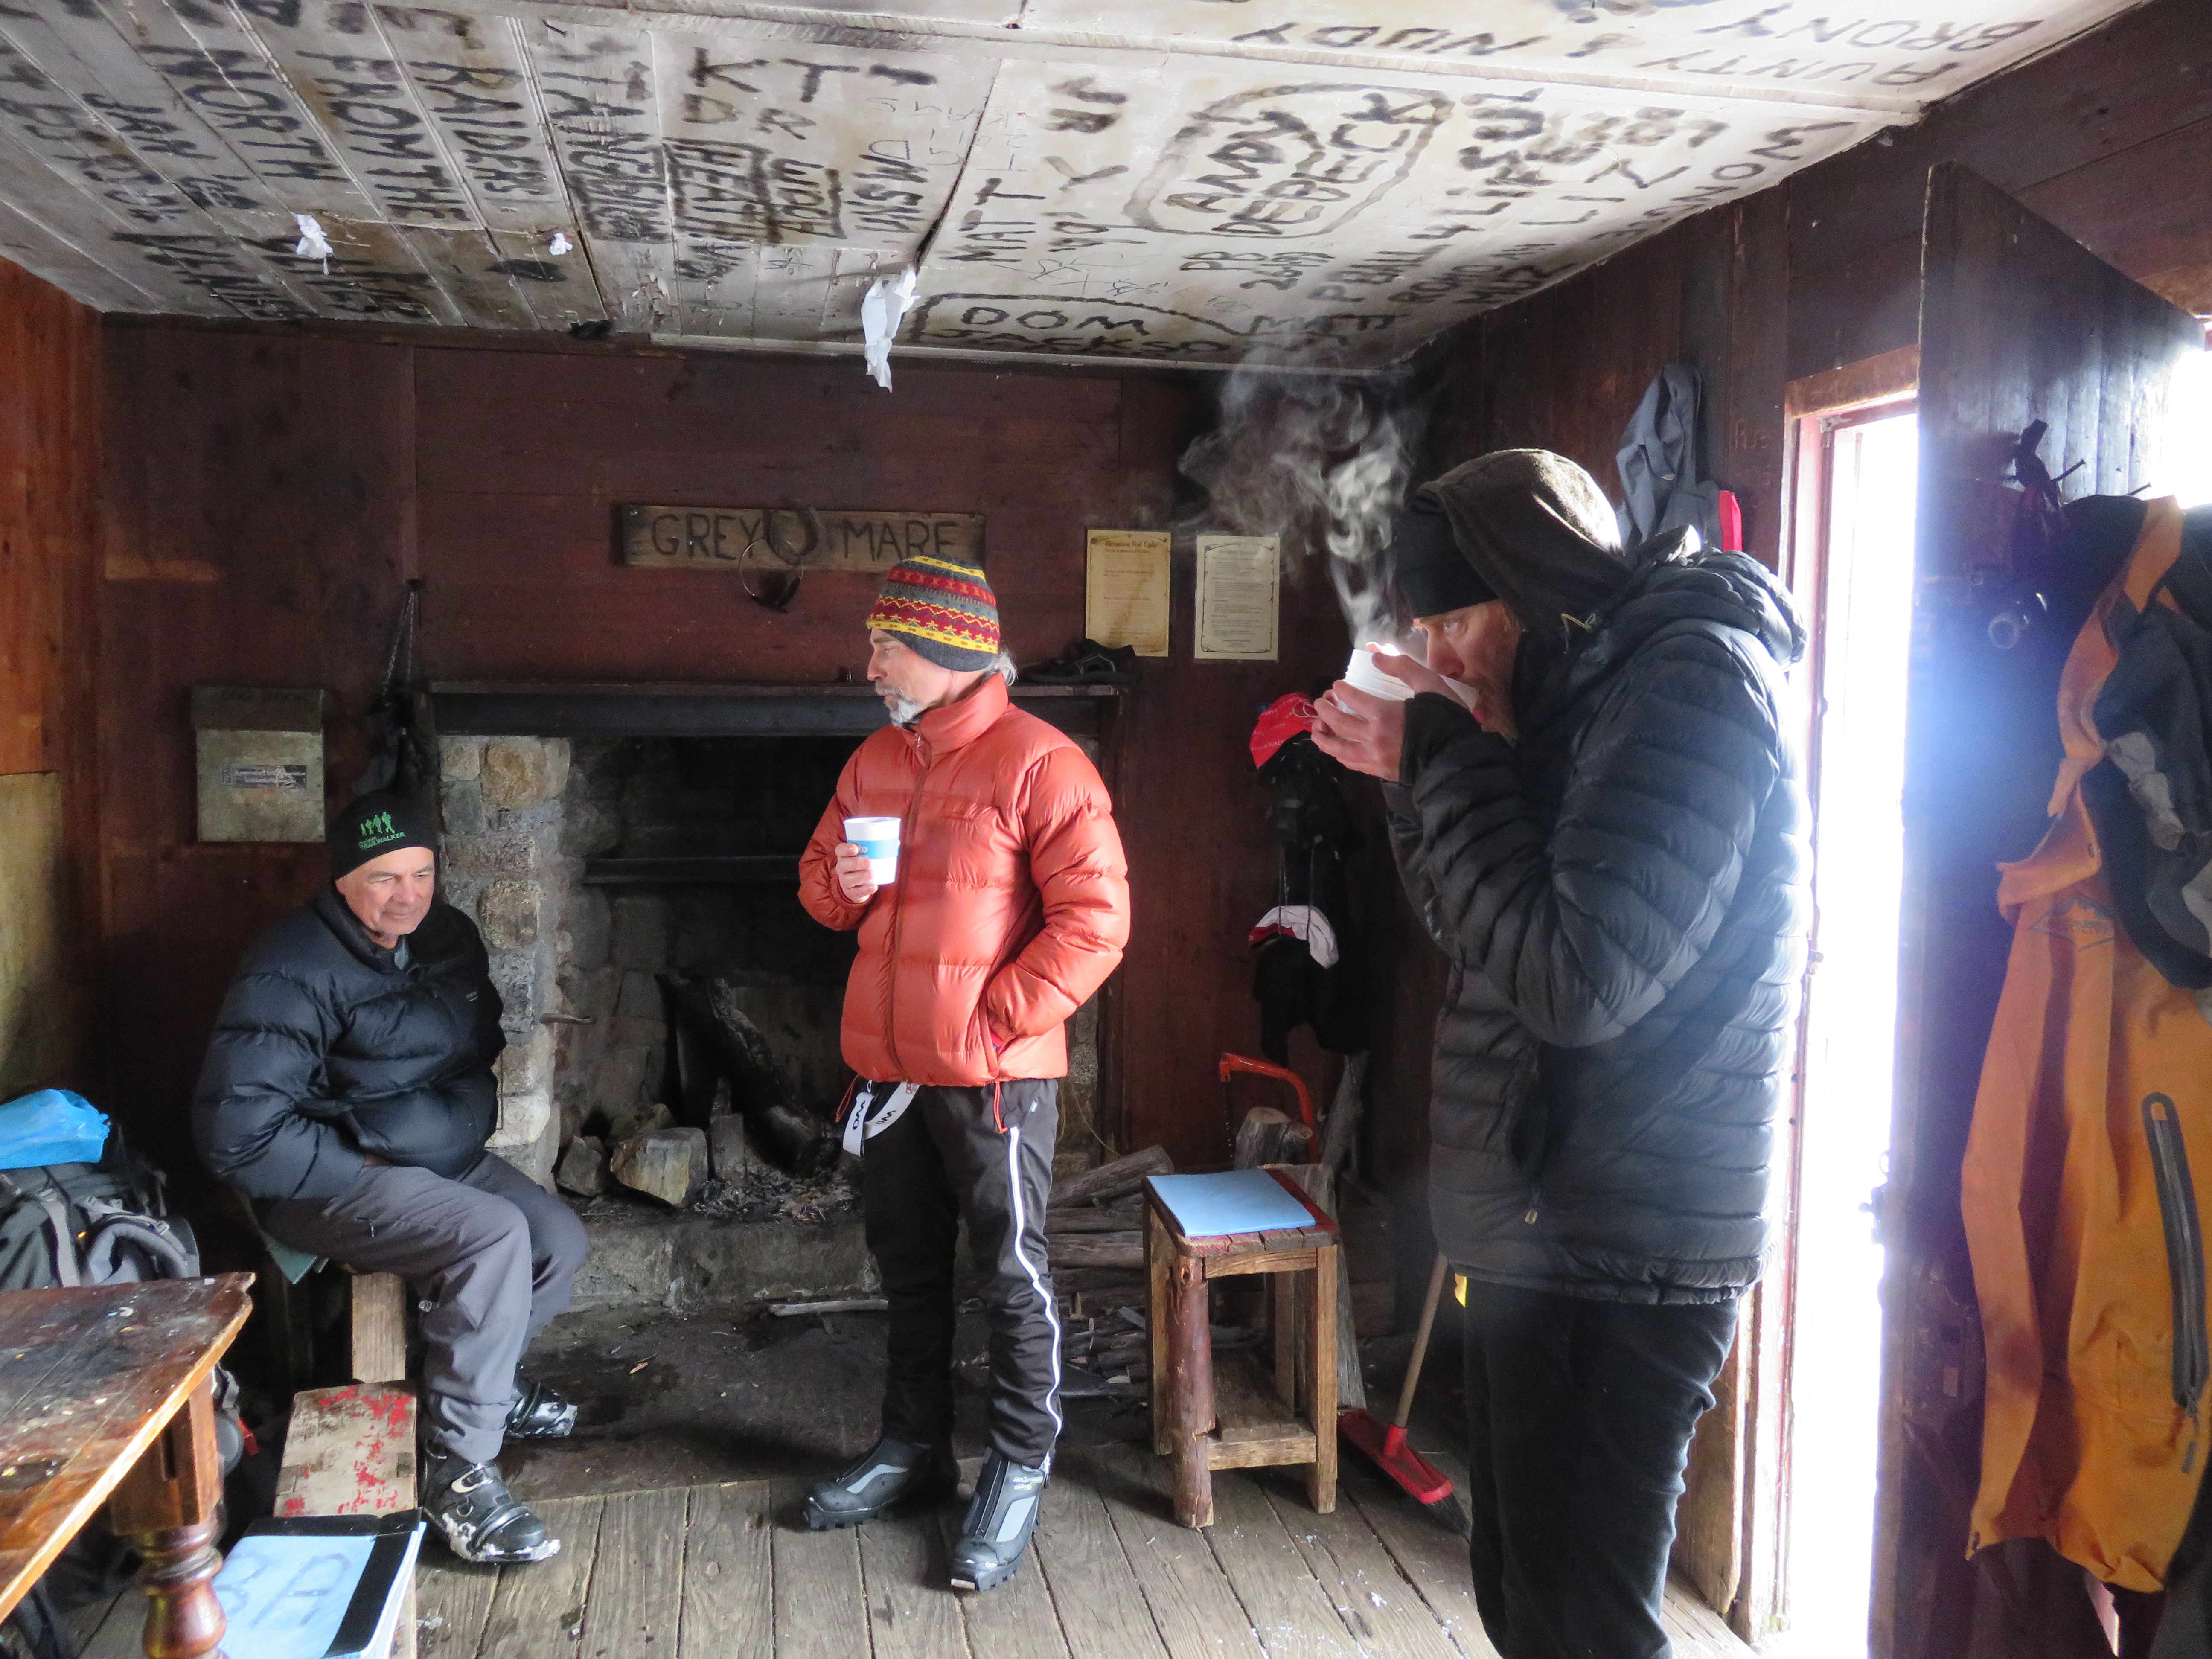 Hut interior and fireplace, Grey Mare Hut